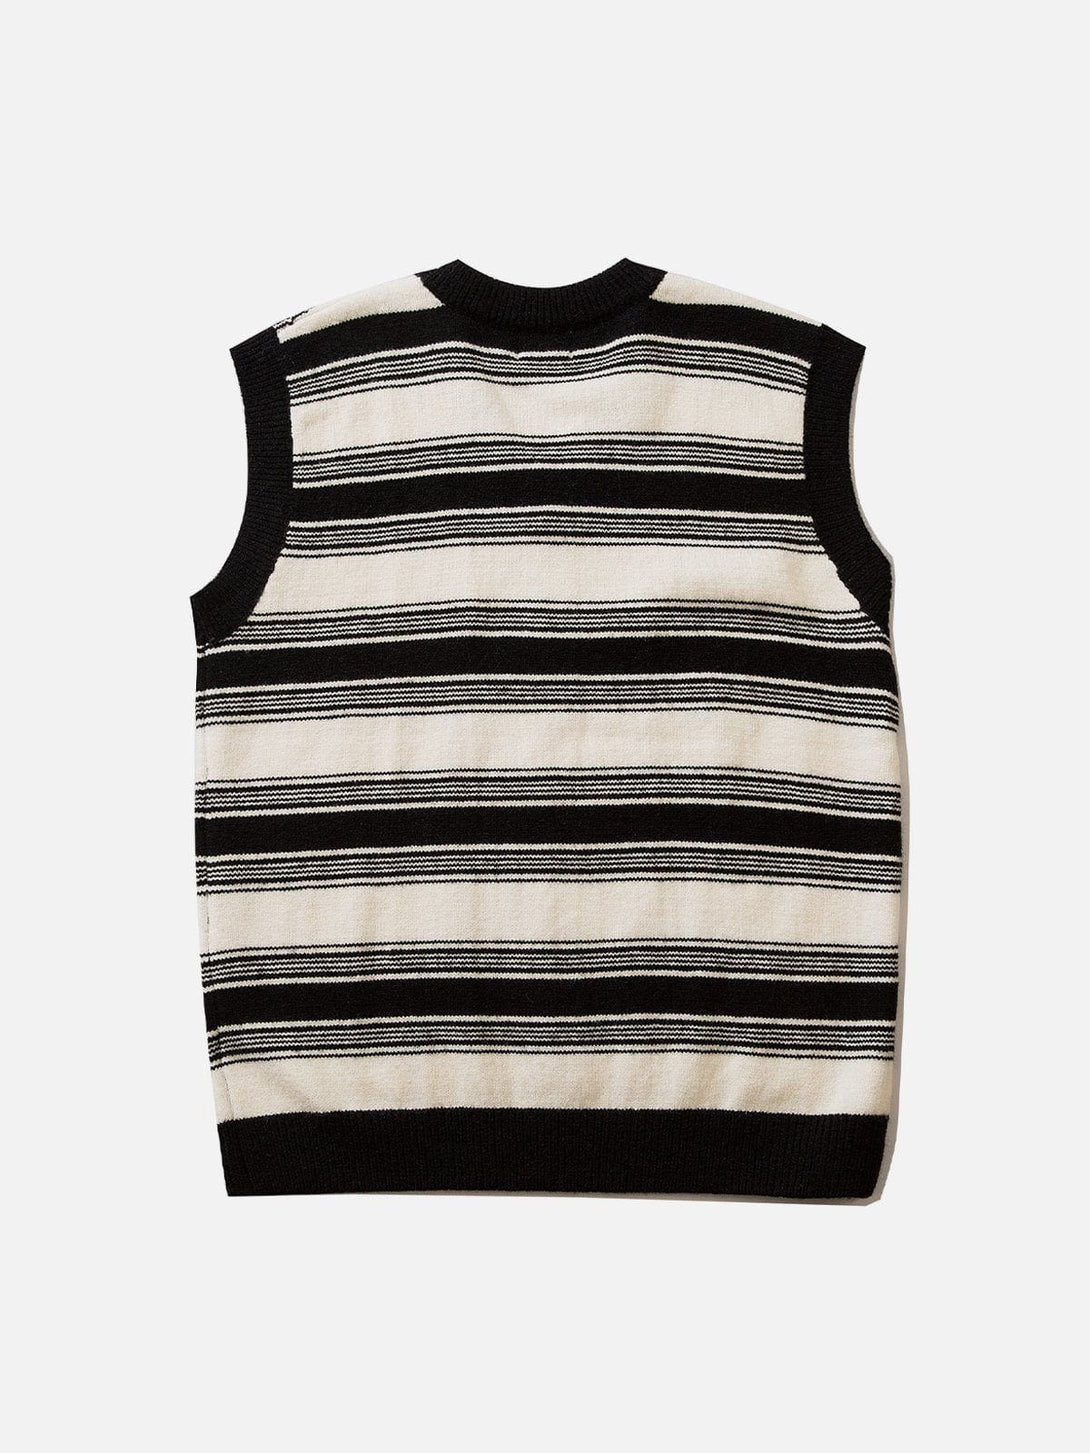 Levefly - Colorblock Stripe Sweater Vest - Streetwear Fashion - levefly.com